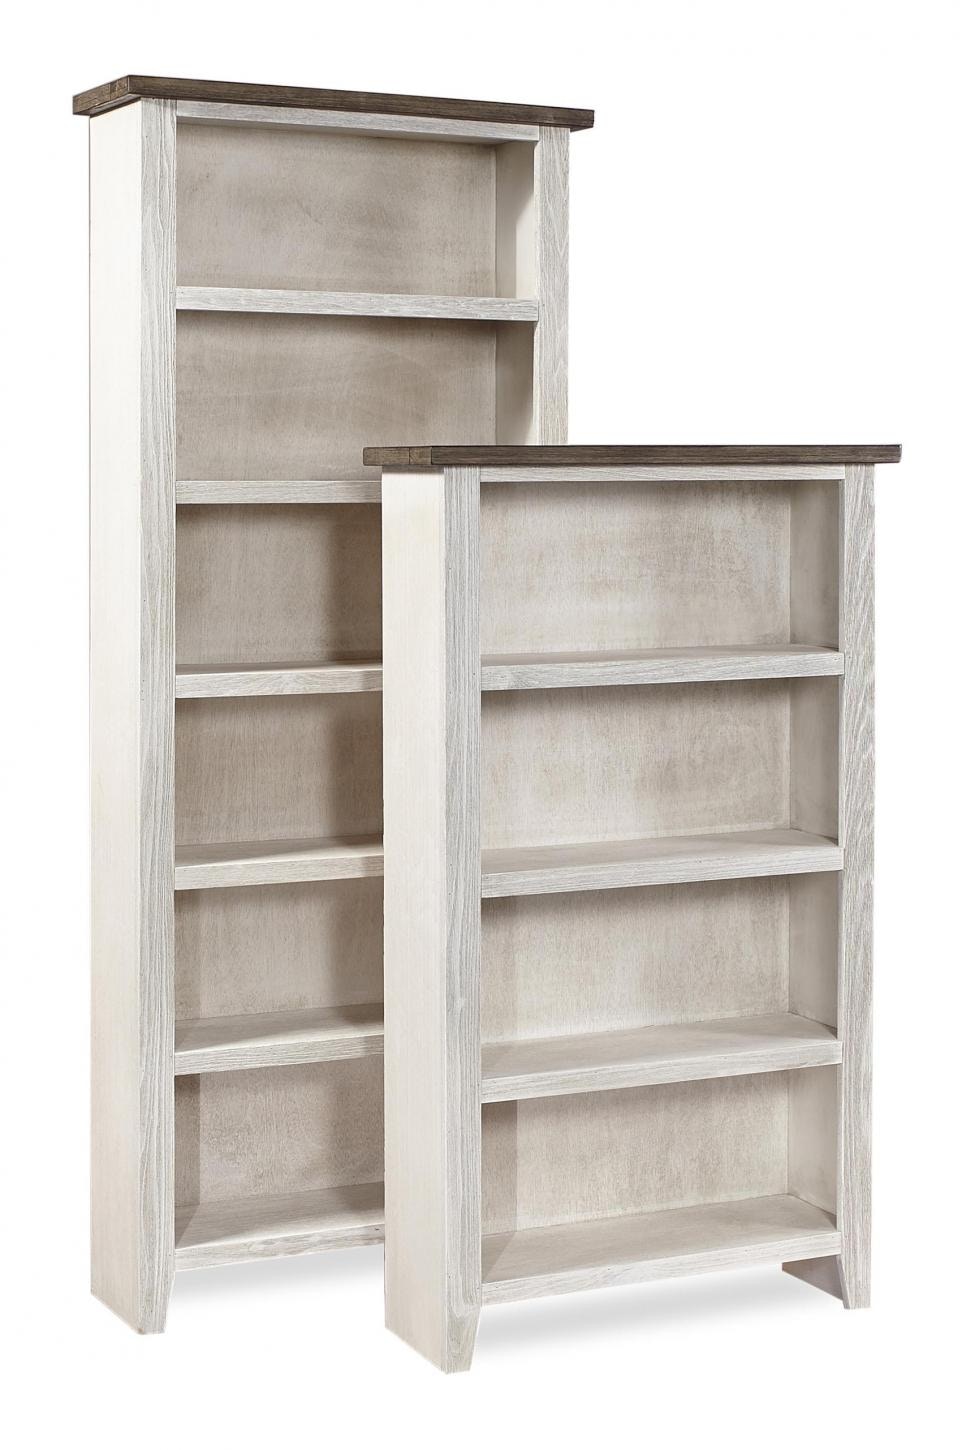 Eastport Drifted White 60” Bookcase WME3460-DWT